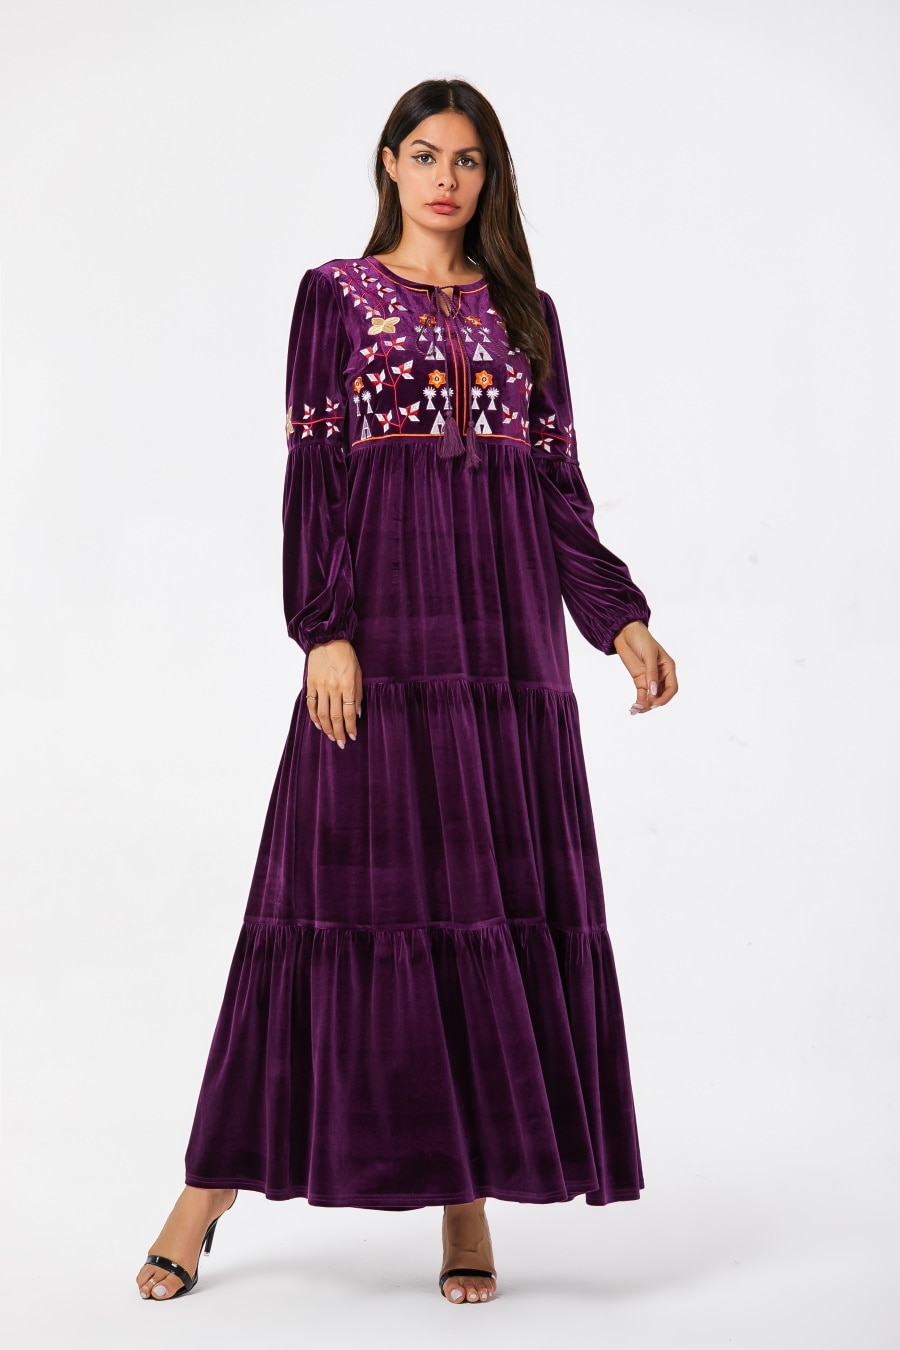 Siskakia Velvet Long Dress Casual Ethnic Floral Embroidery Maxi Dresses Full Sleeve Winter 2019 Swing Arabian Wears 26 Colors